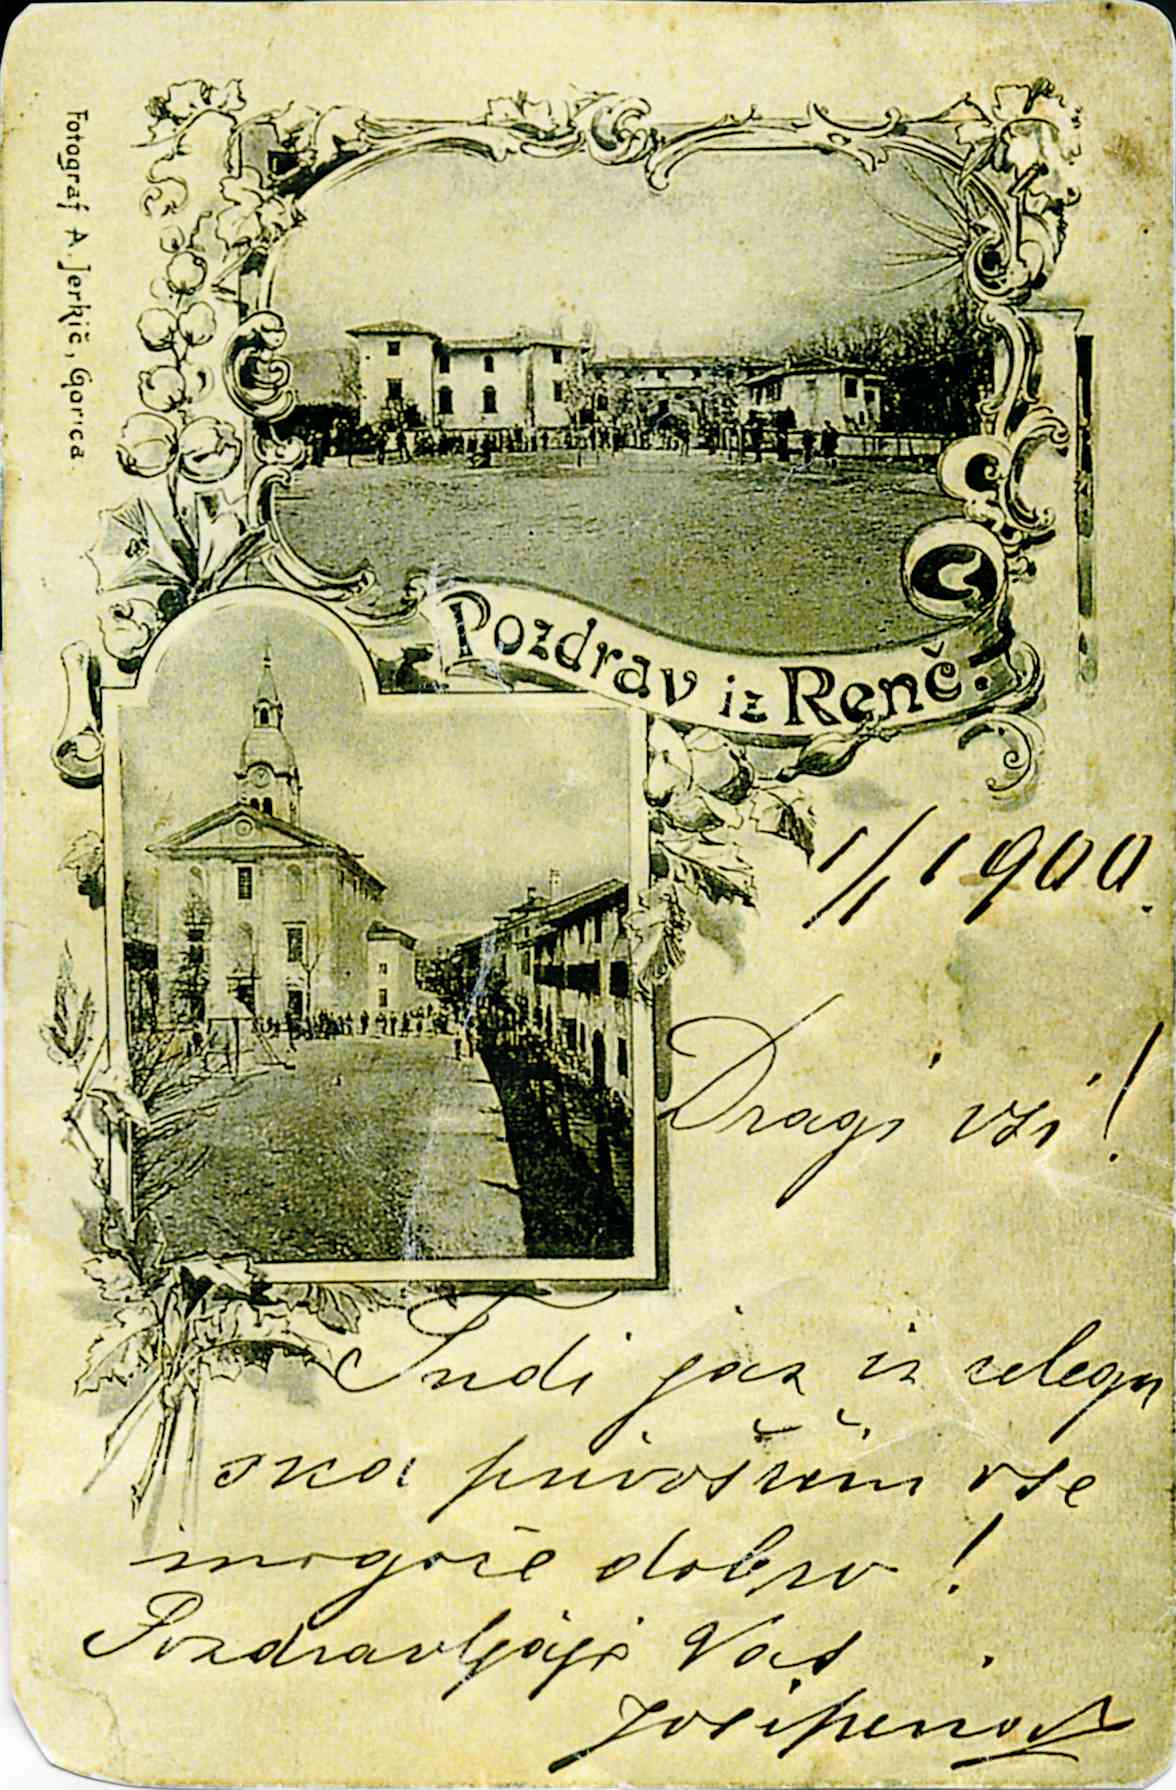 Rene 1900